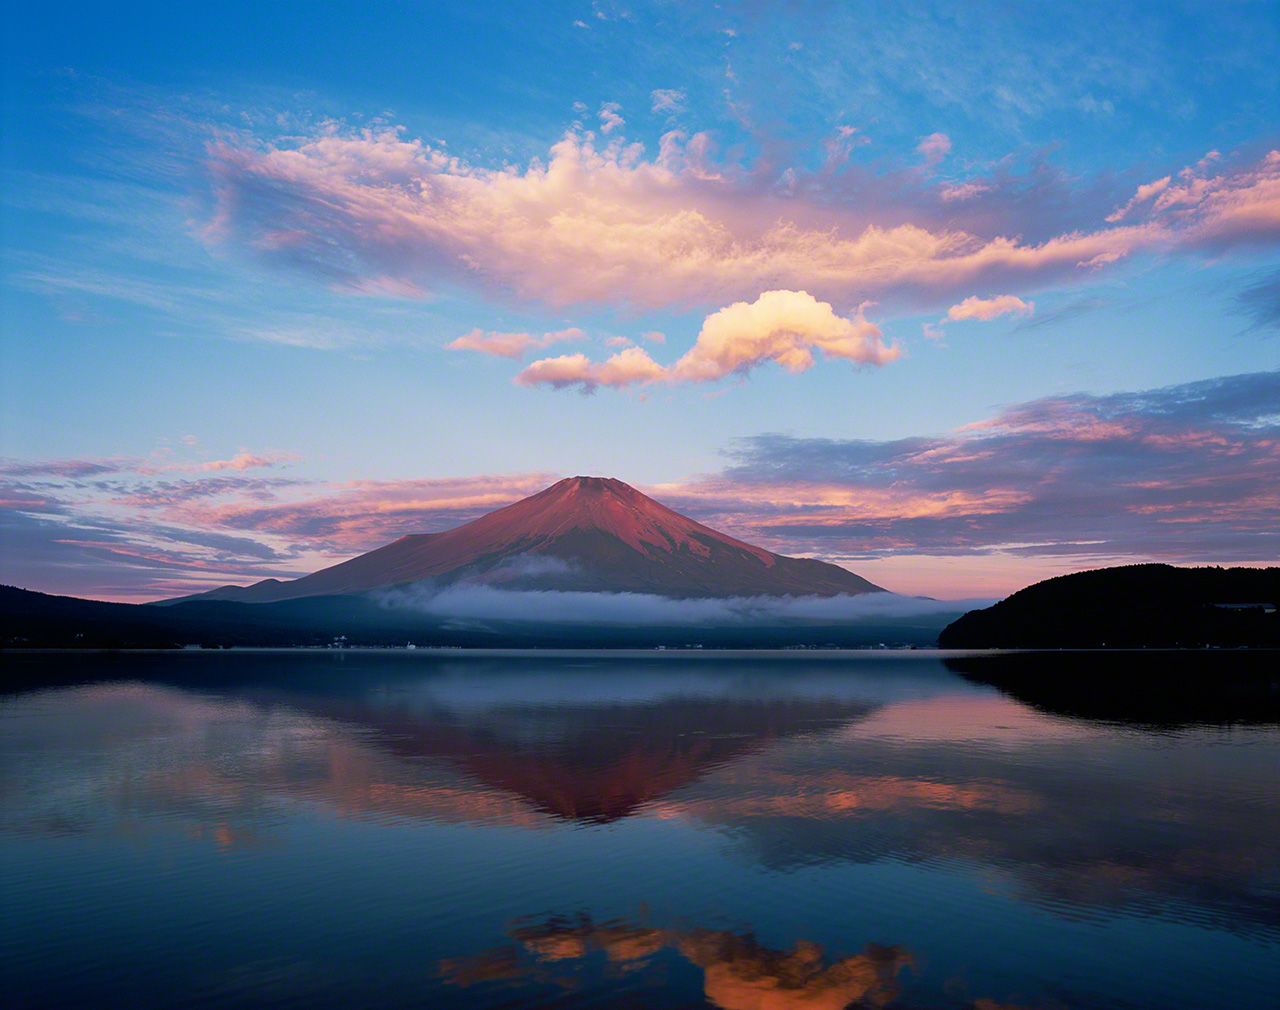 The beautiful lake of Yamanakako.